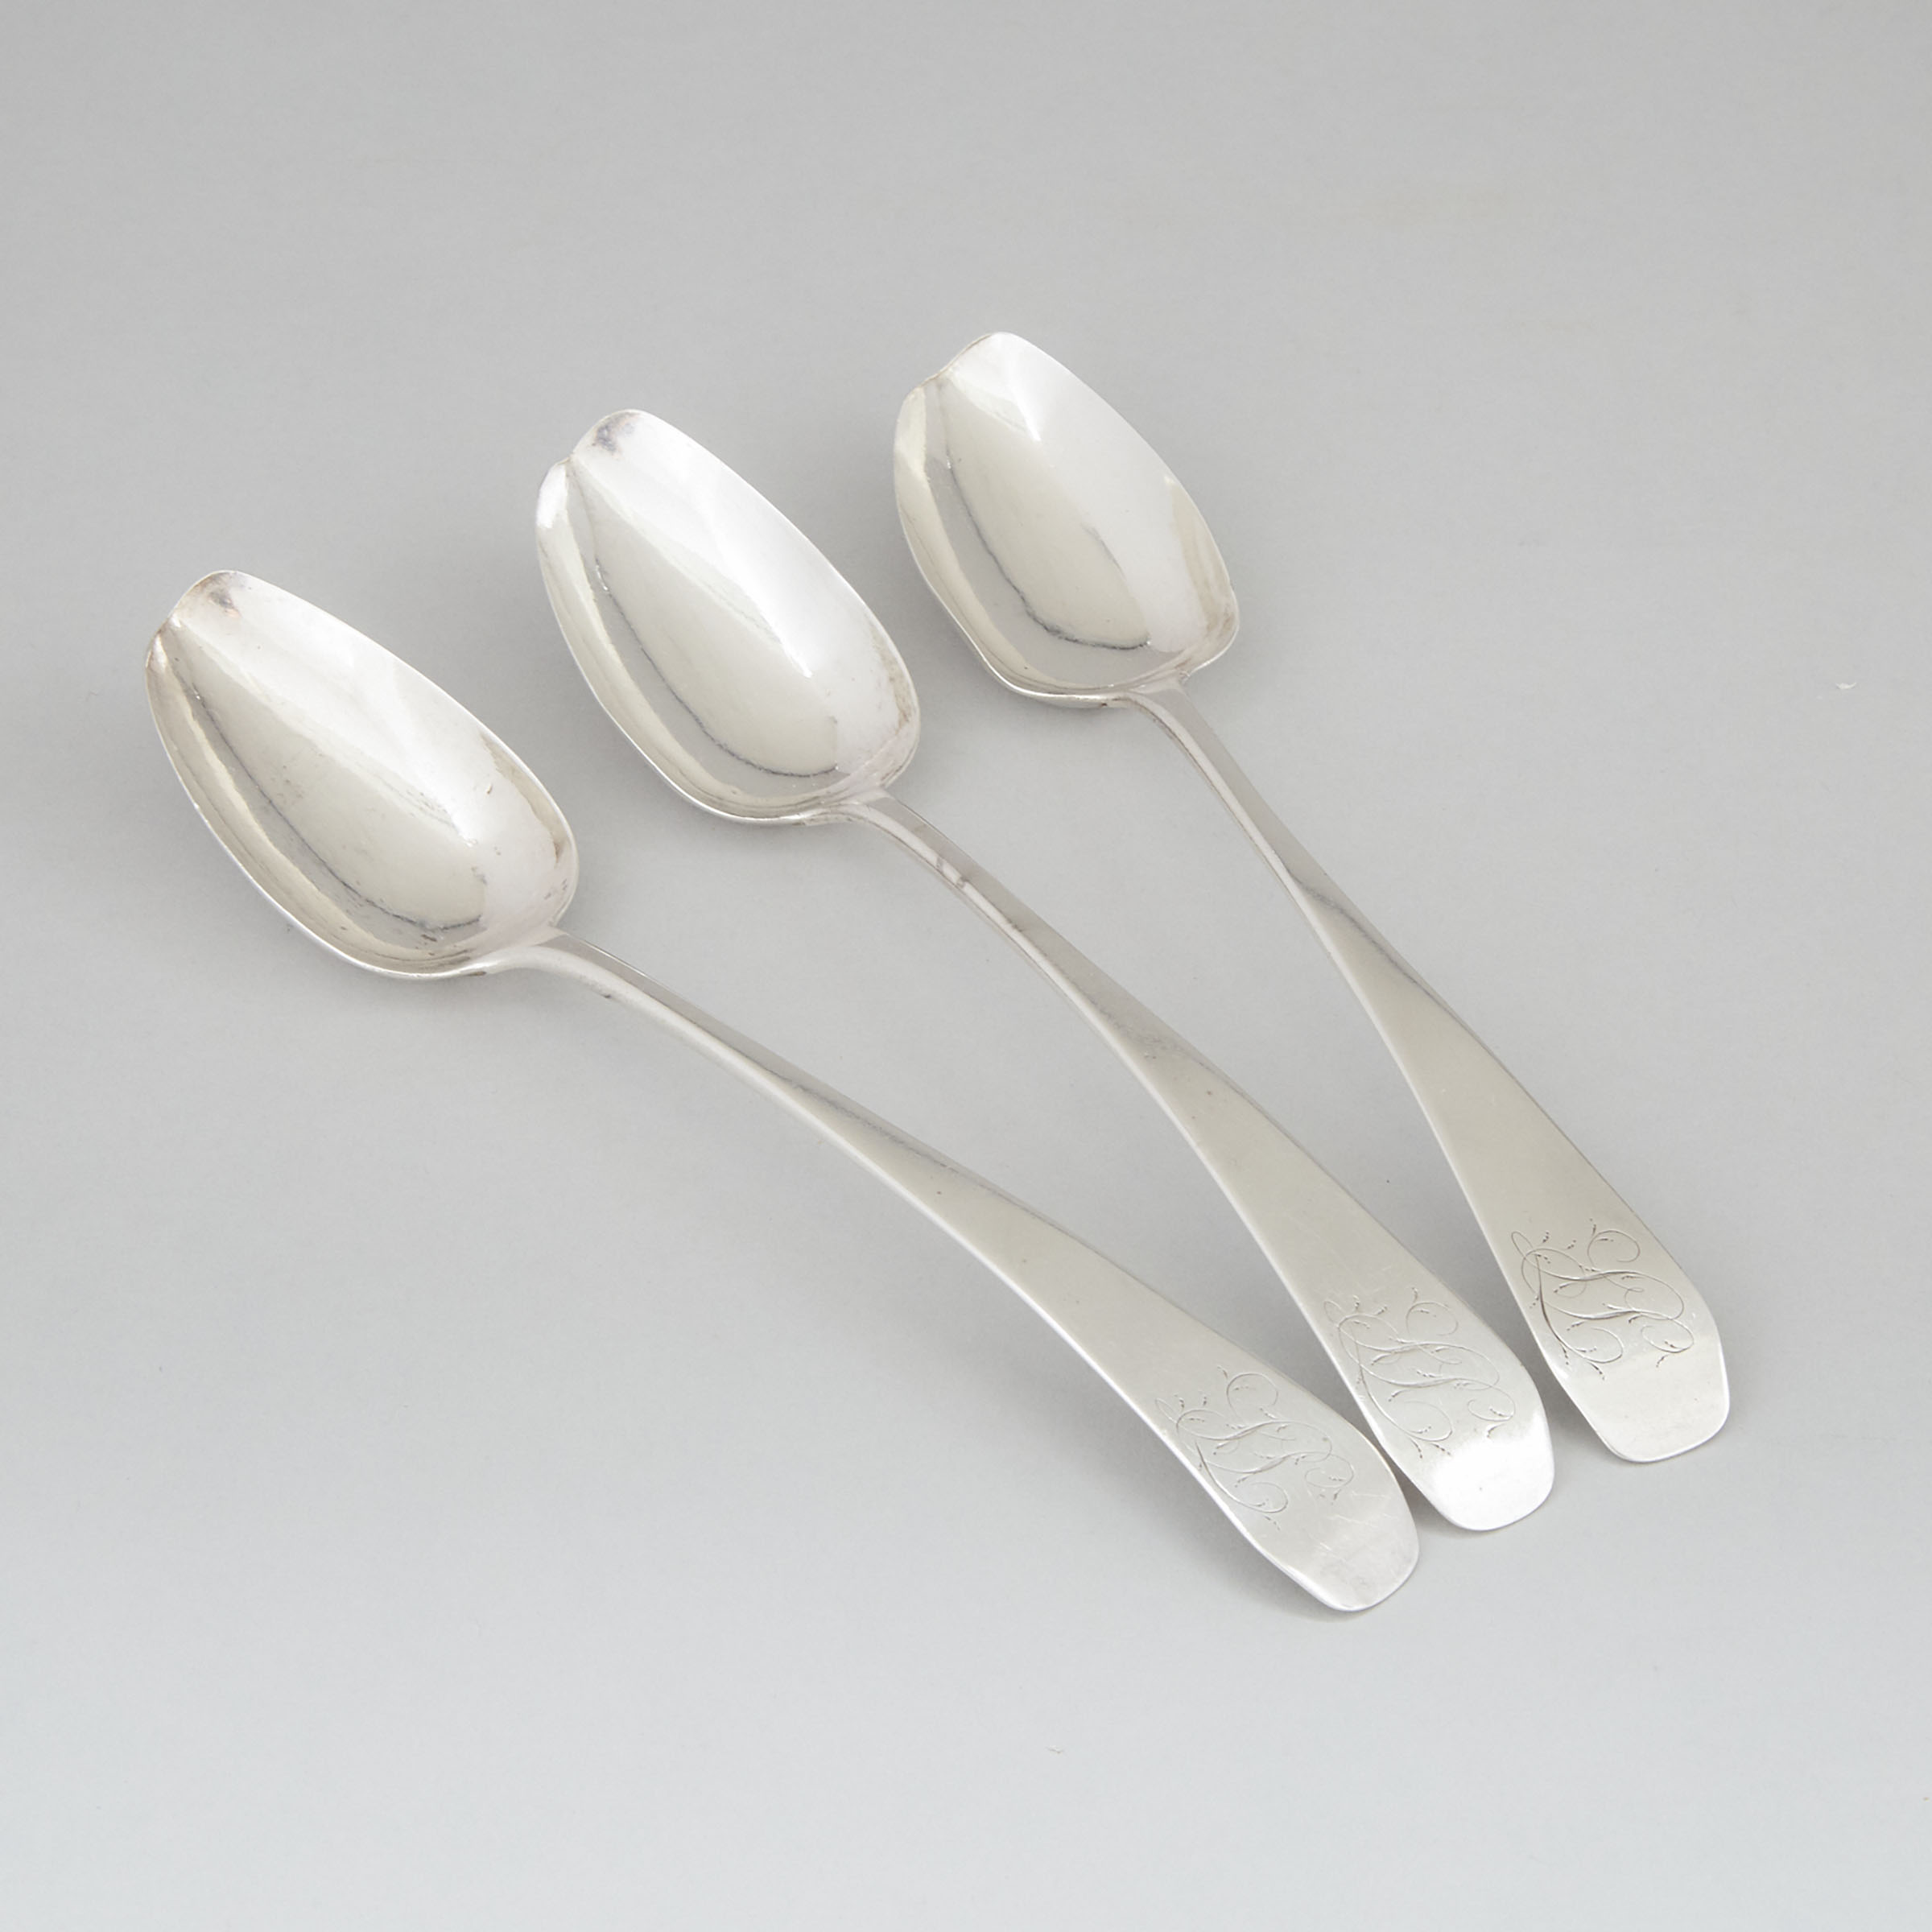 Three American Silver Coffin-End Table Spoons, John & Peter Targee, New York, N.Y., c.1810